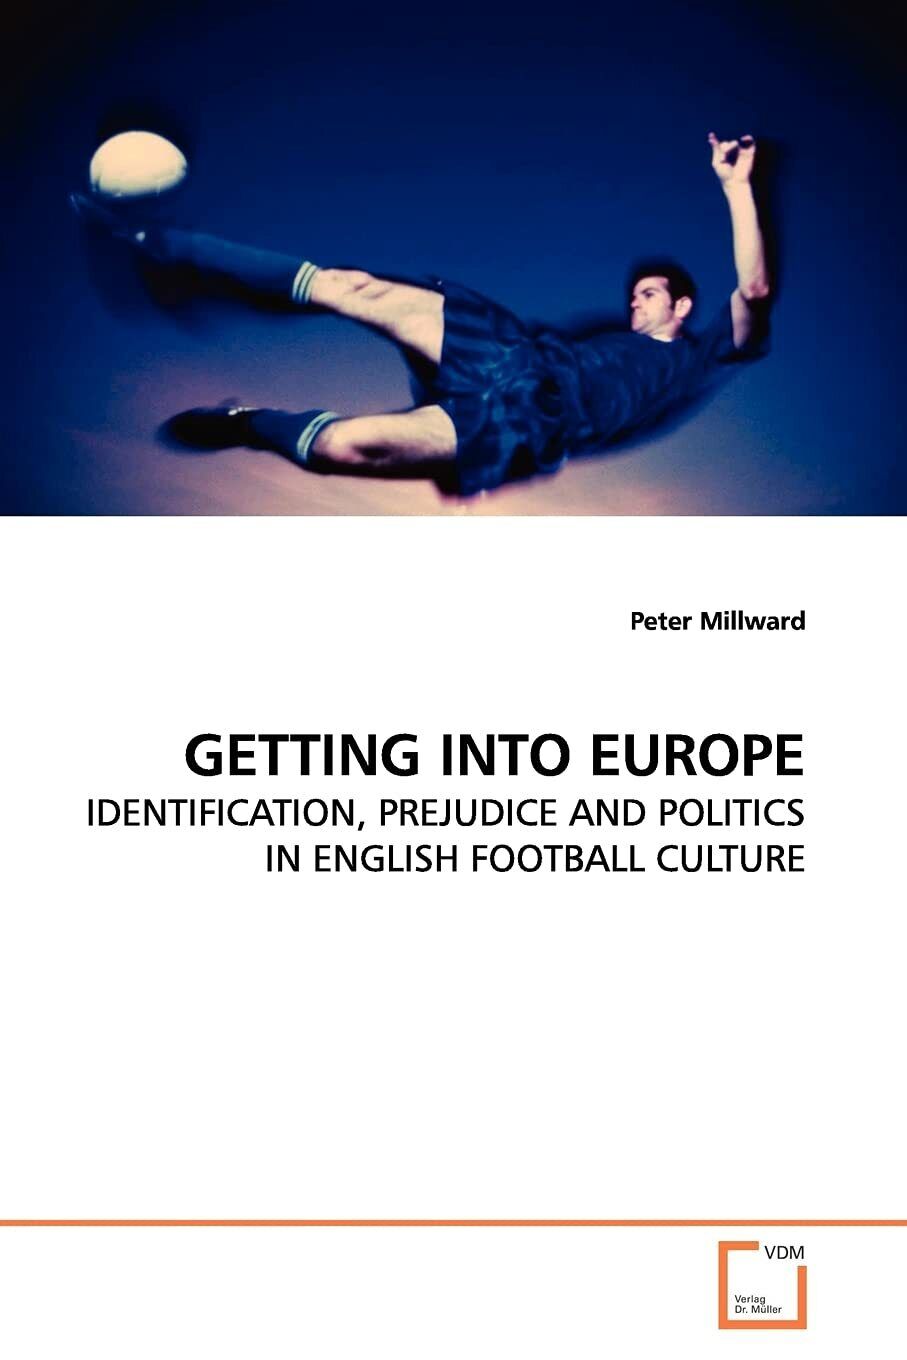 GETTING INTO EUROPE - Peter Millward - VDM Verlag, 2009 libro usato